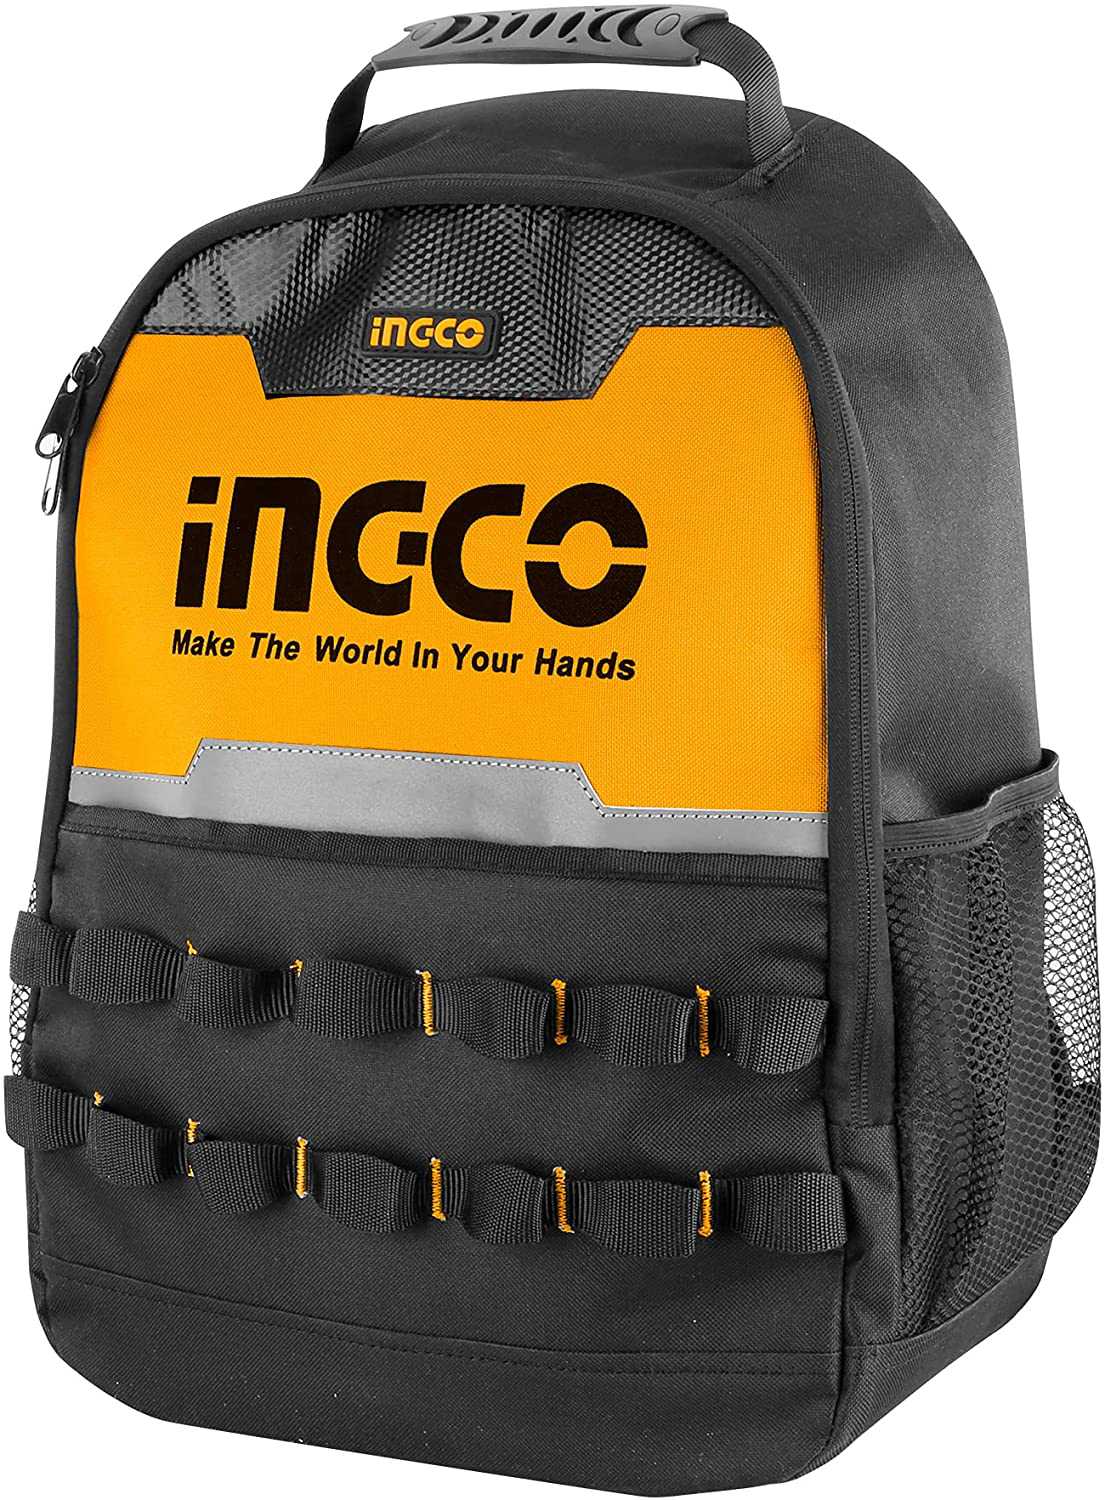 Ingco Tools Bag pack